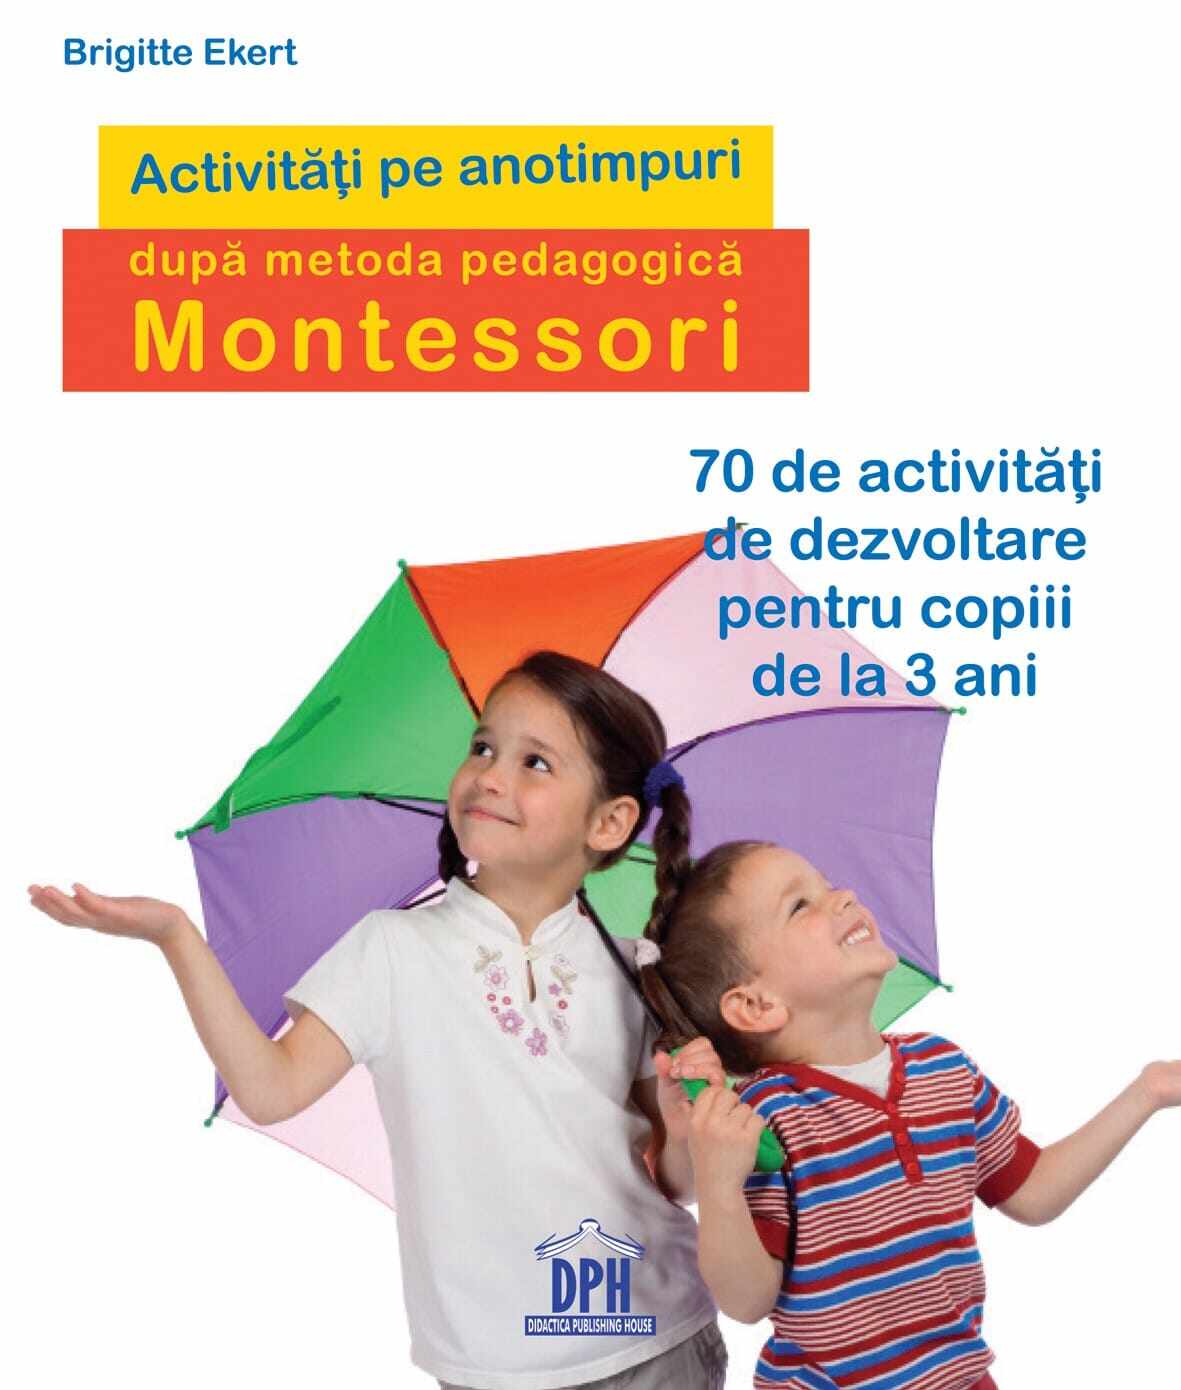 Activitati pe anotimpuri dupa metoda pedagogica Montessori, DPH, 2-3 ani +